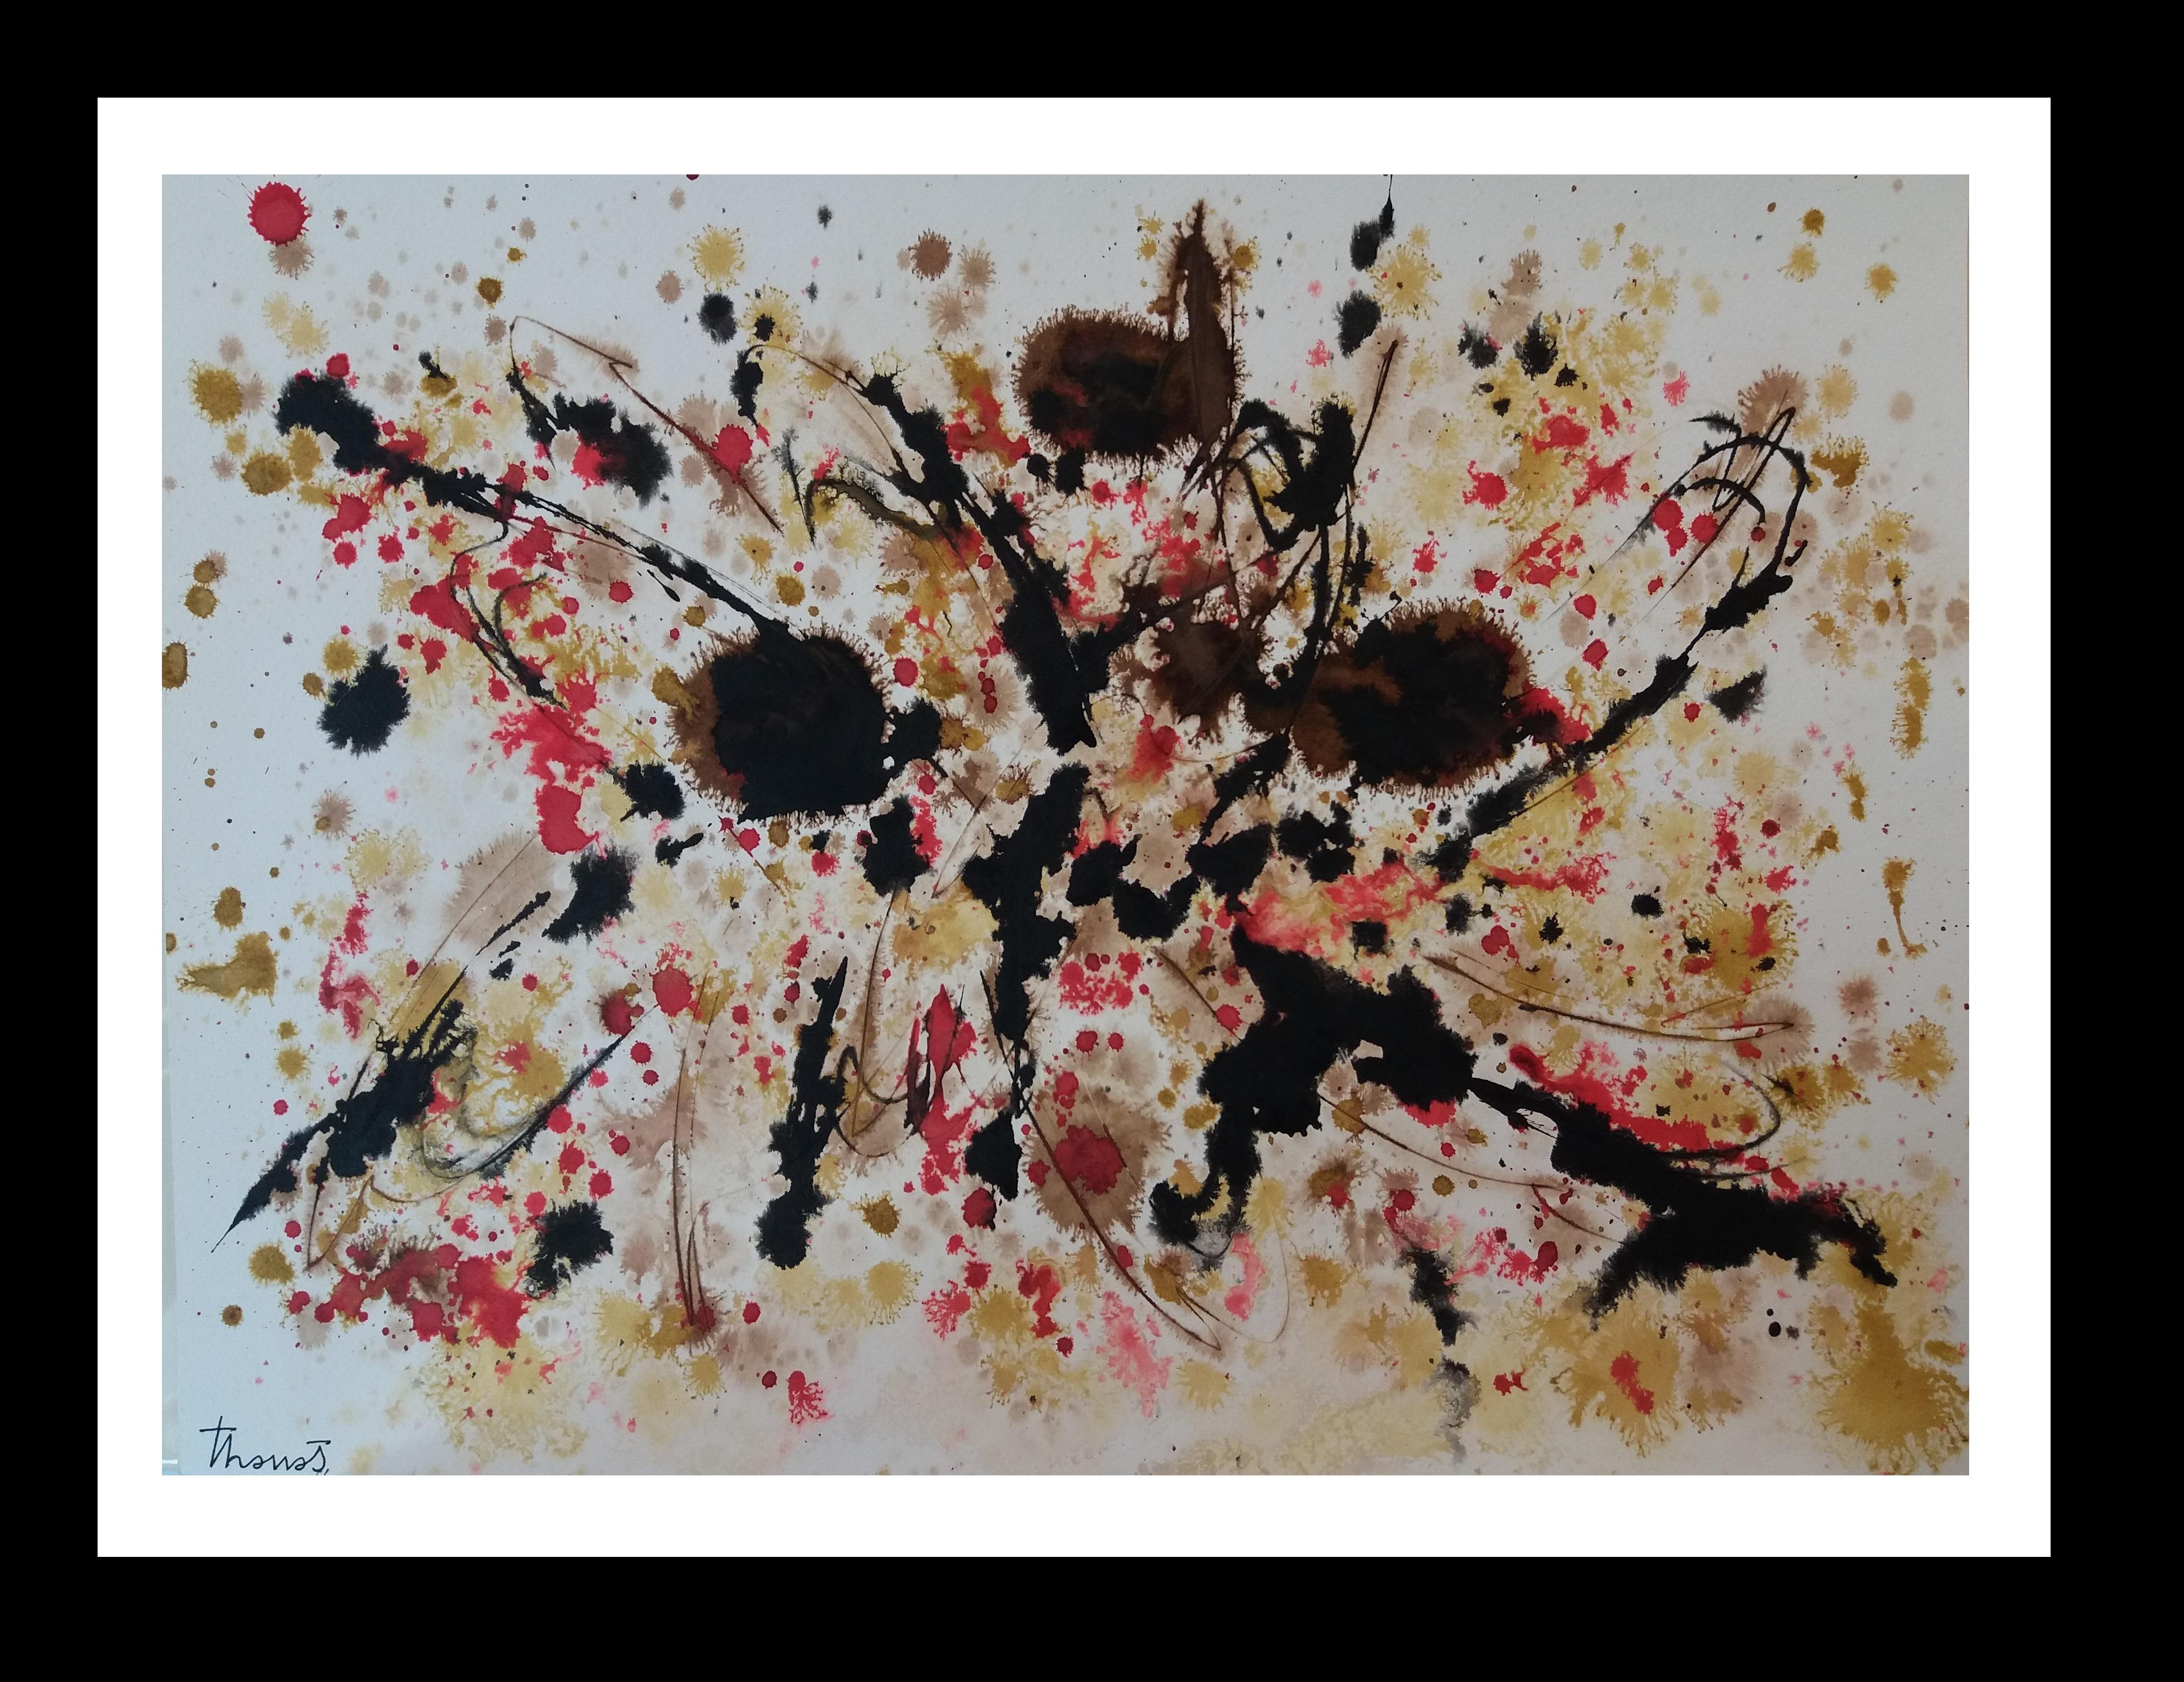 Josep THARRATS Abstract Painting - Tharrats  Black  Constellation 20  original abstract acrylic paper painting